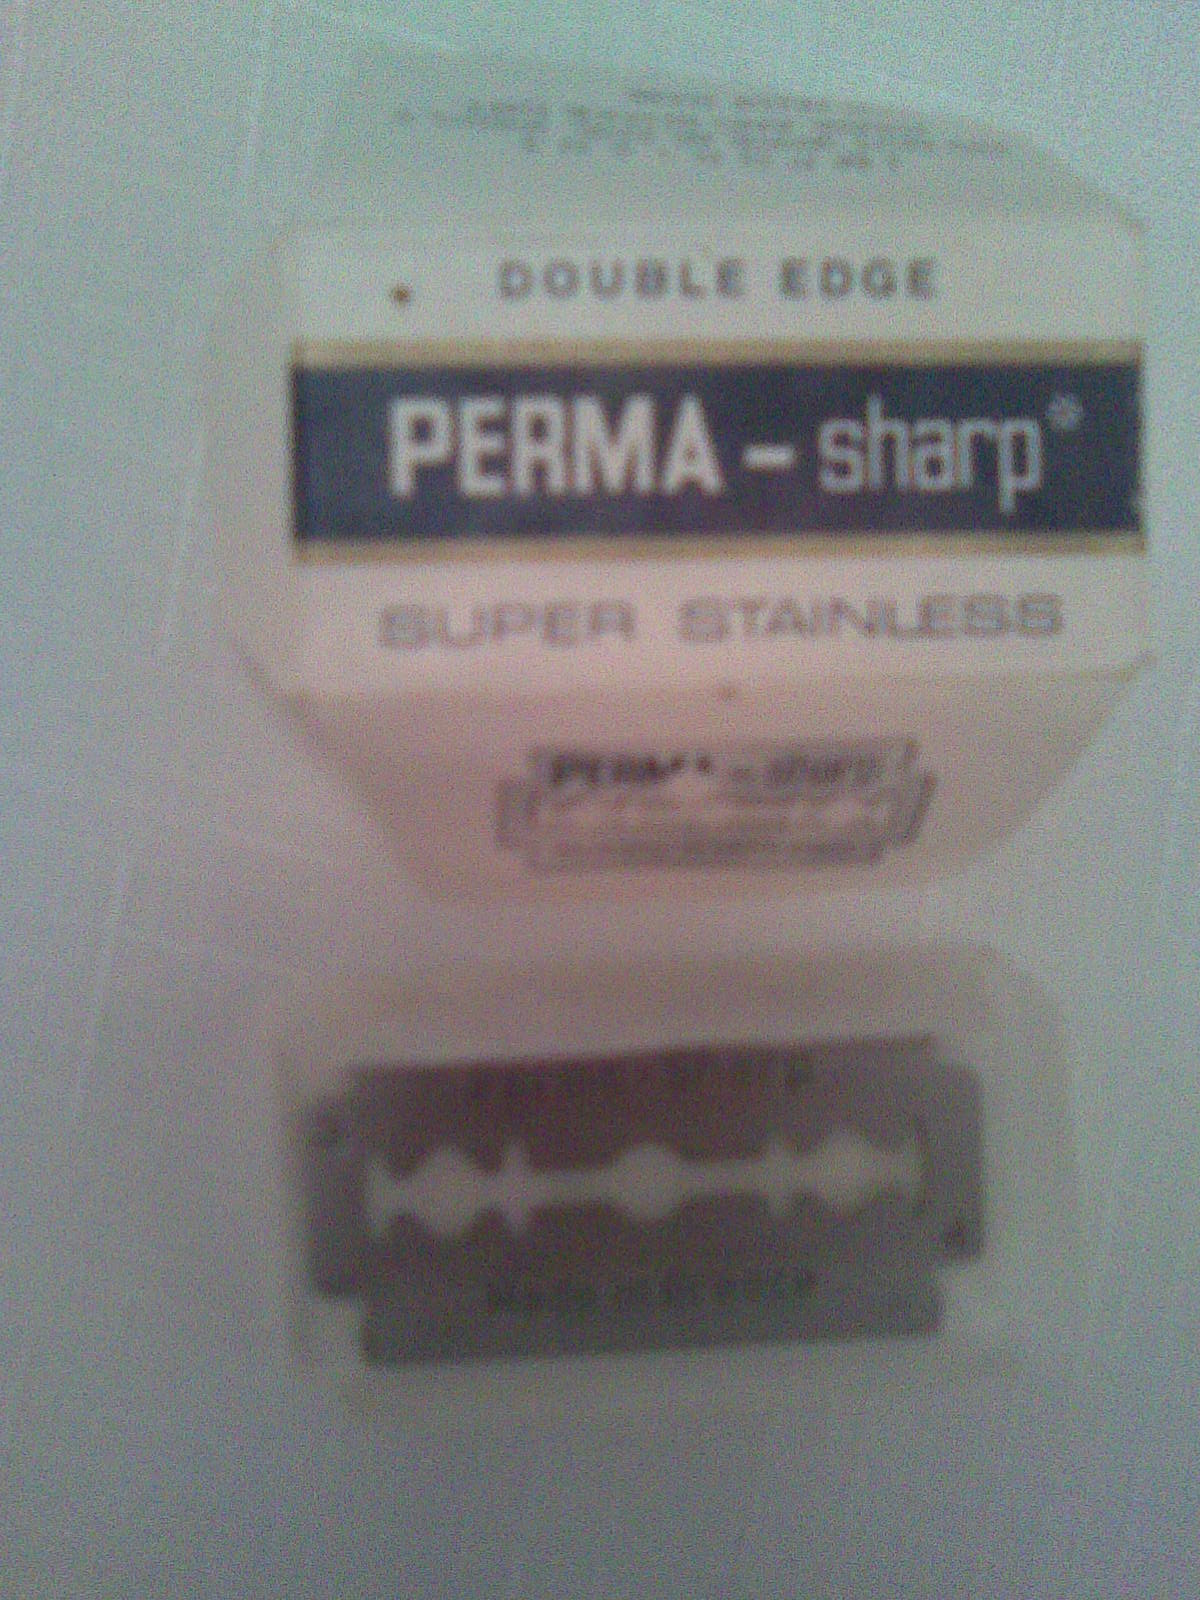 Perma-sharp